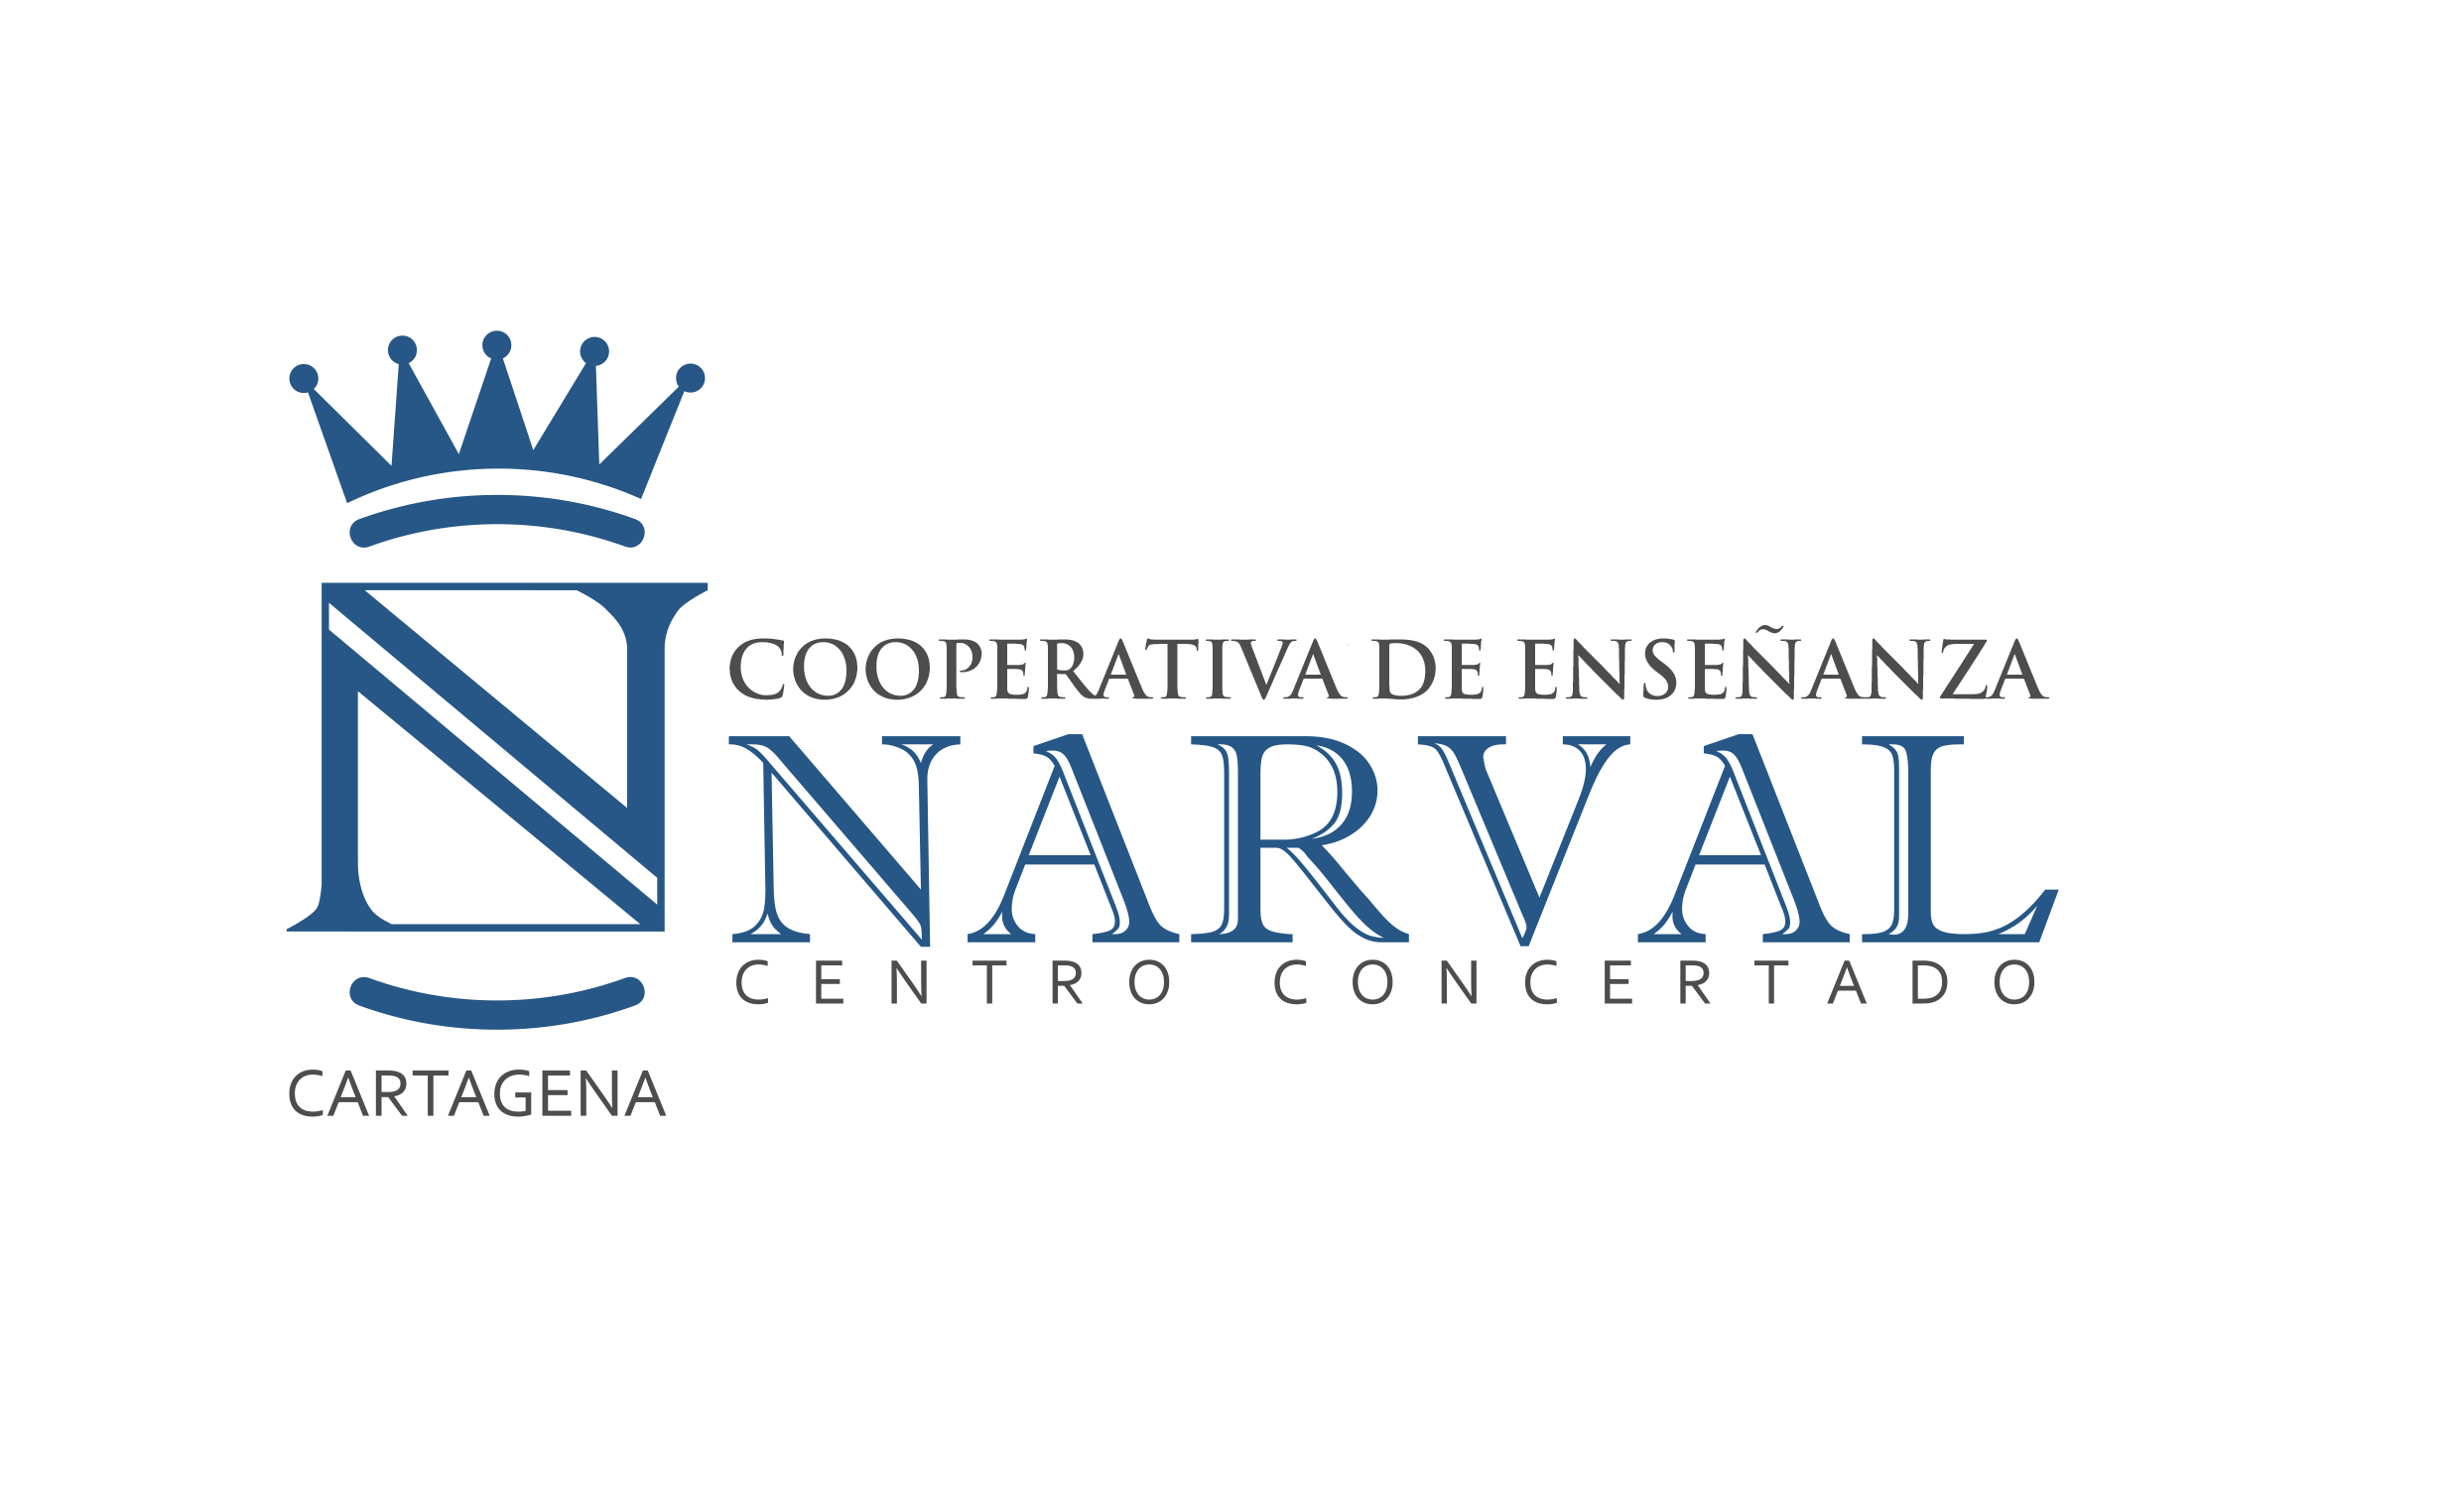 COLEGIO NARVAL logo